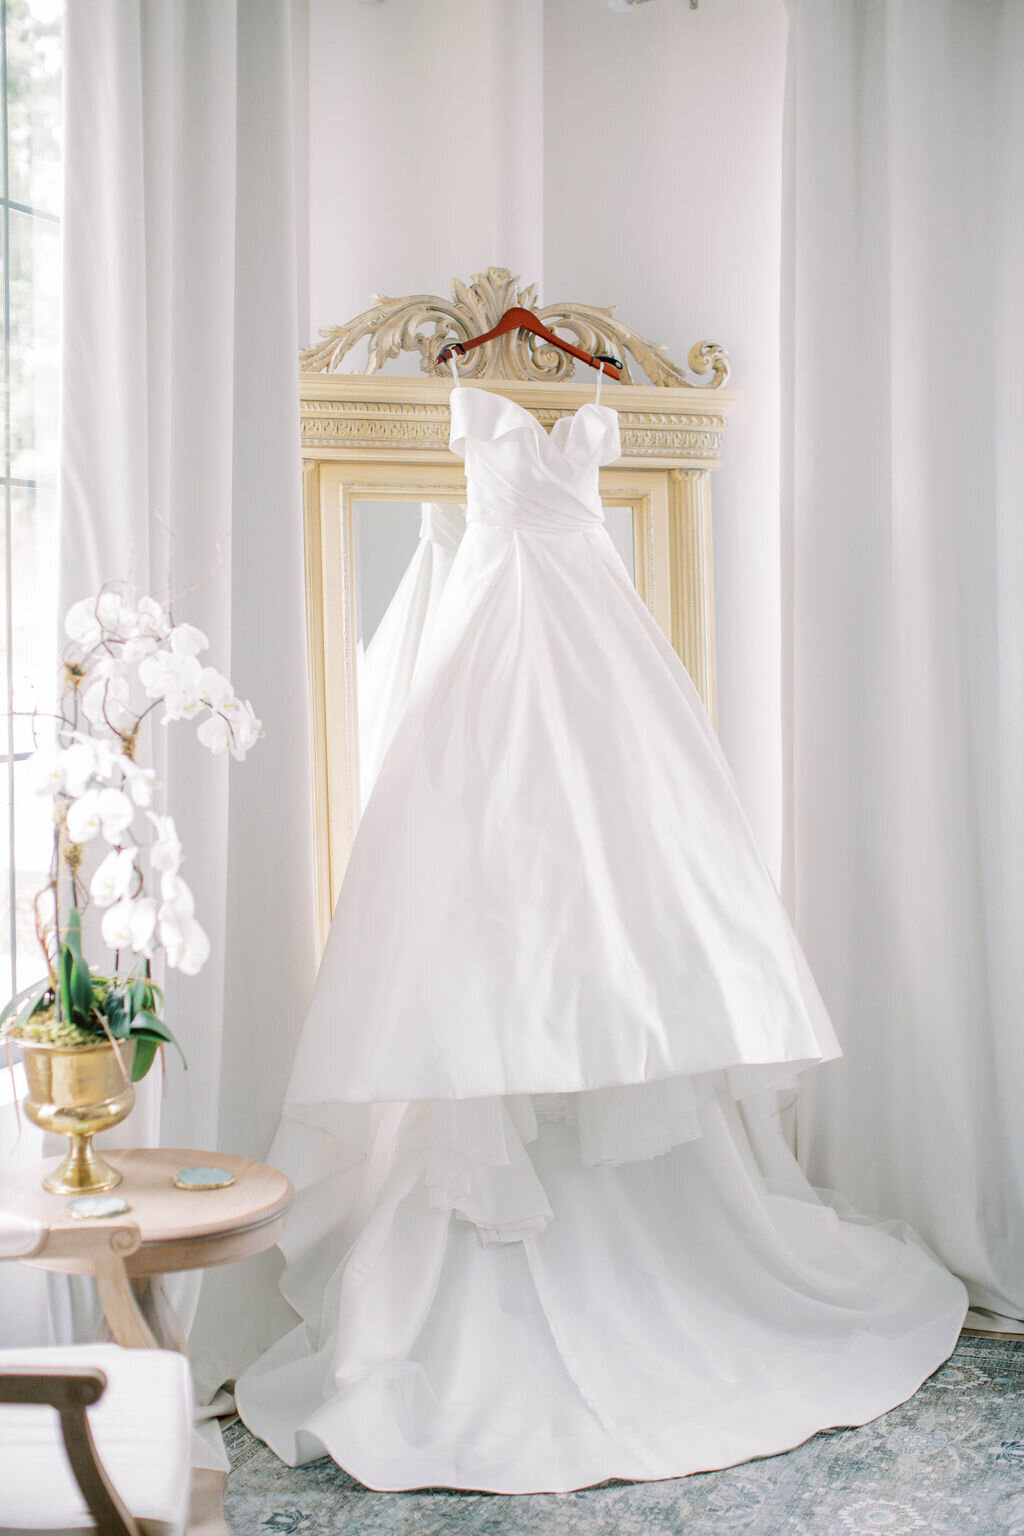 pronovias wedding dress on mirror